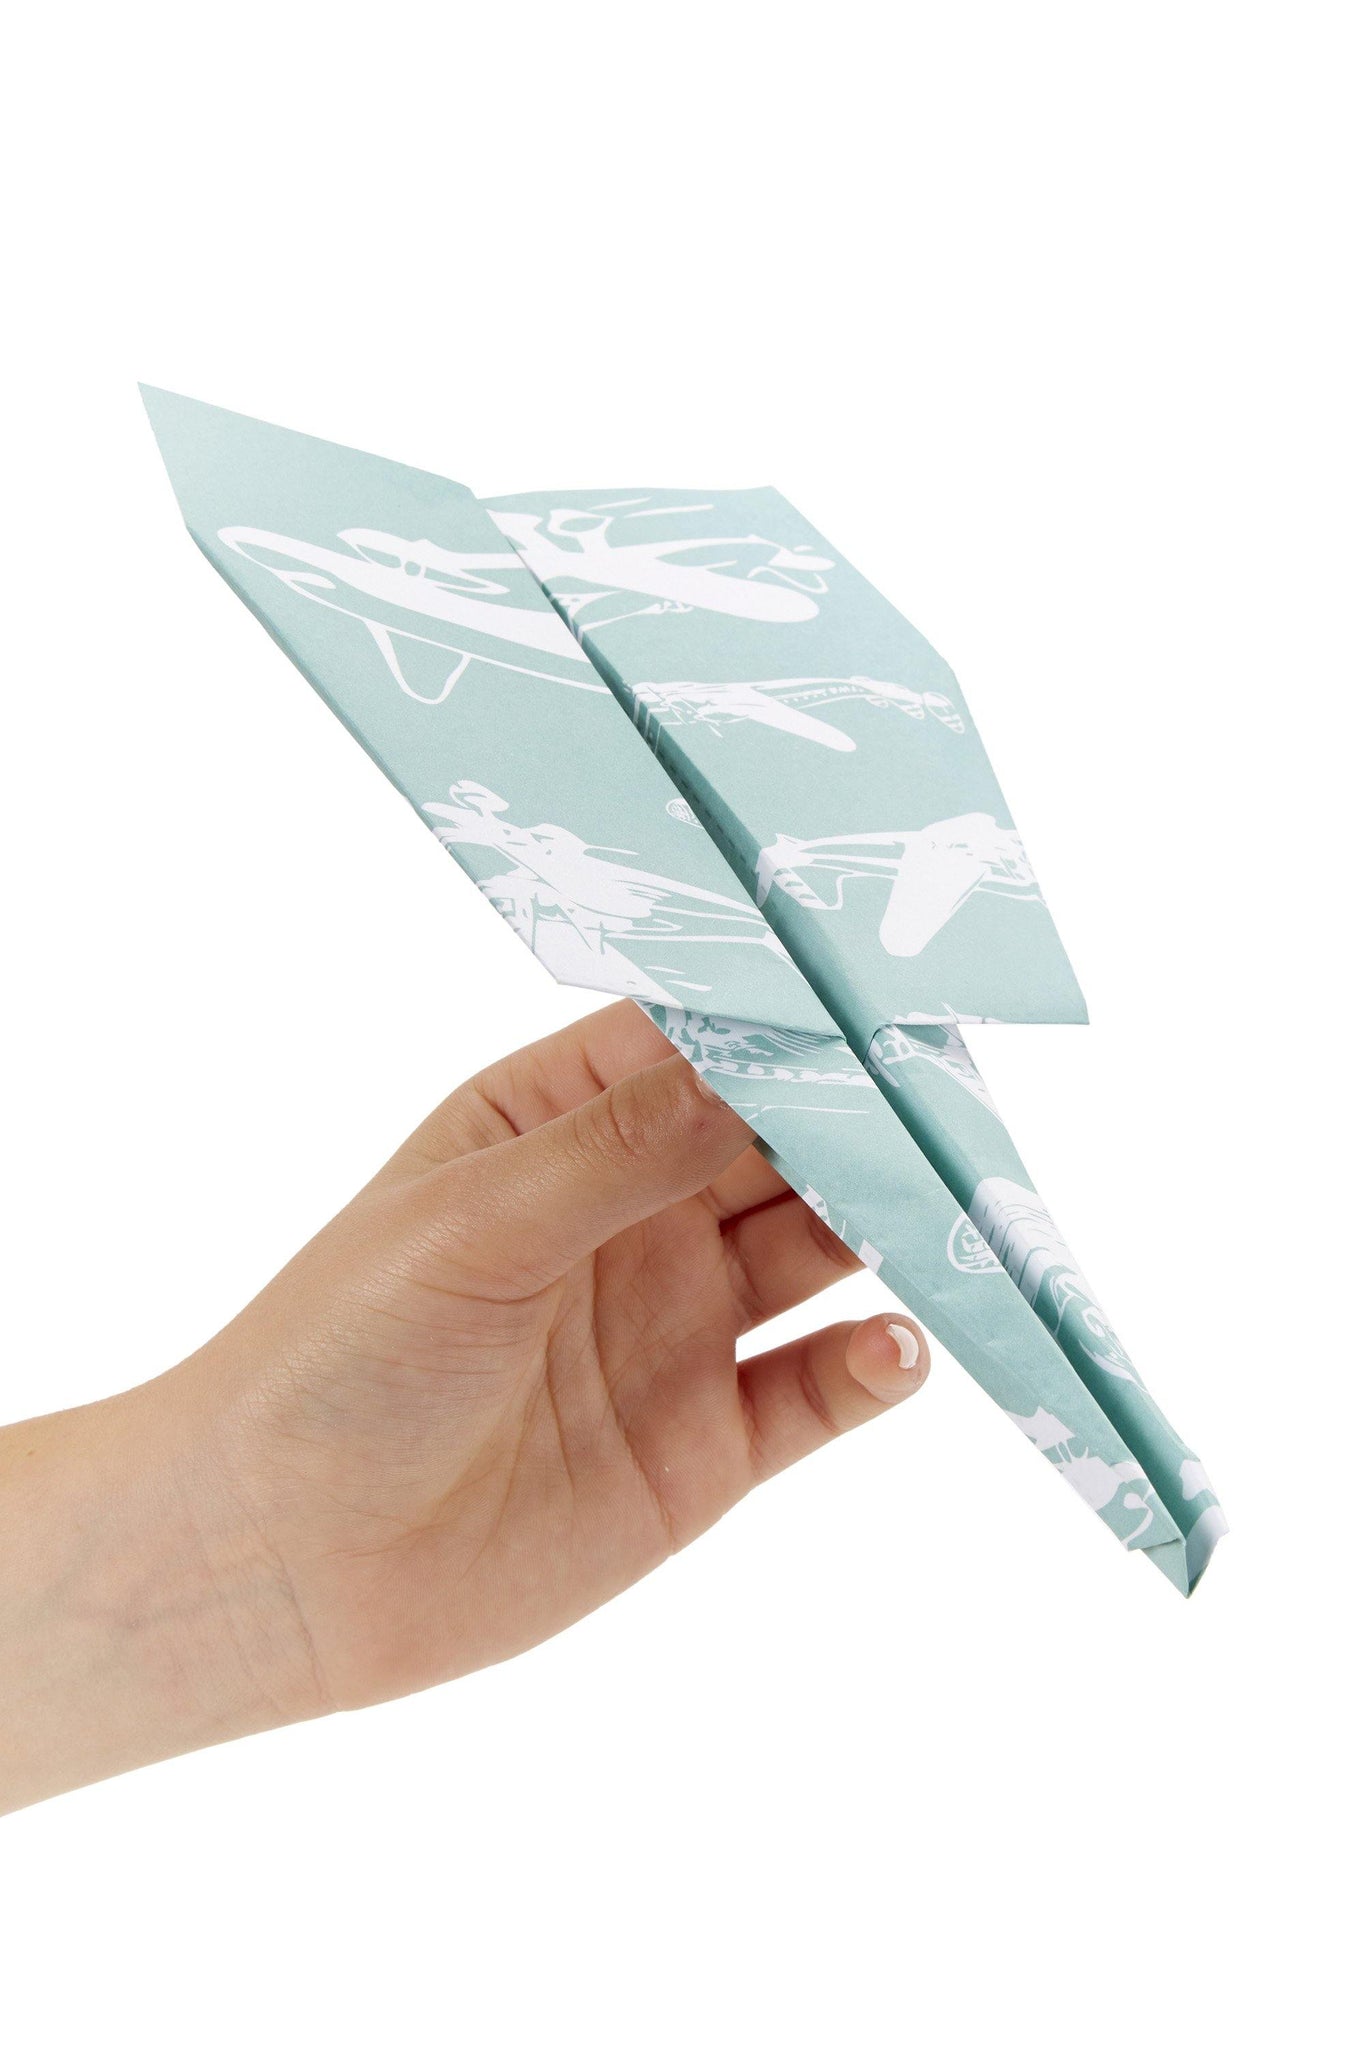 60 Second Paper Planes kit - Kits - Science Museum Shop 3